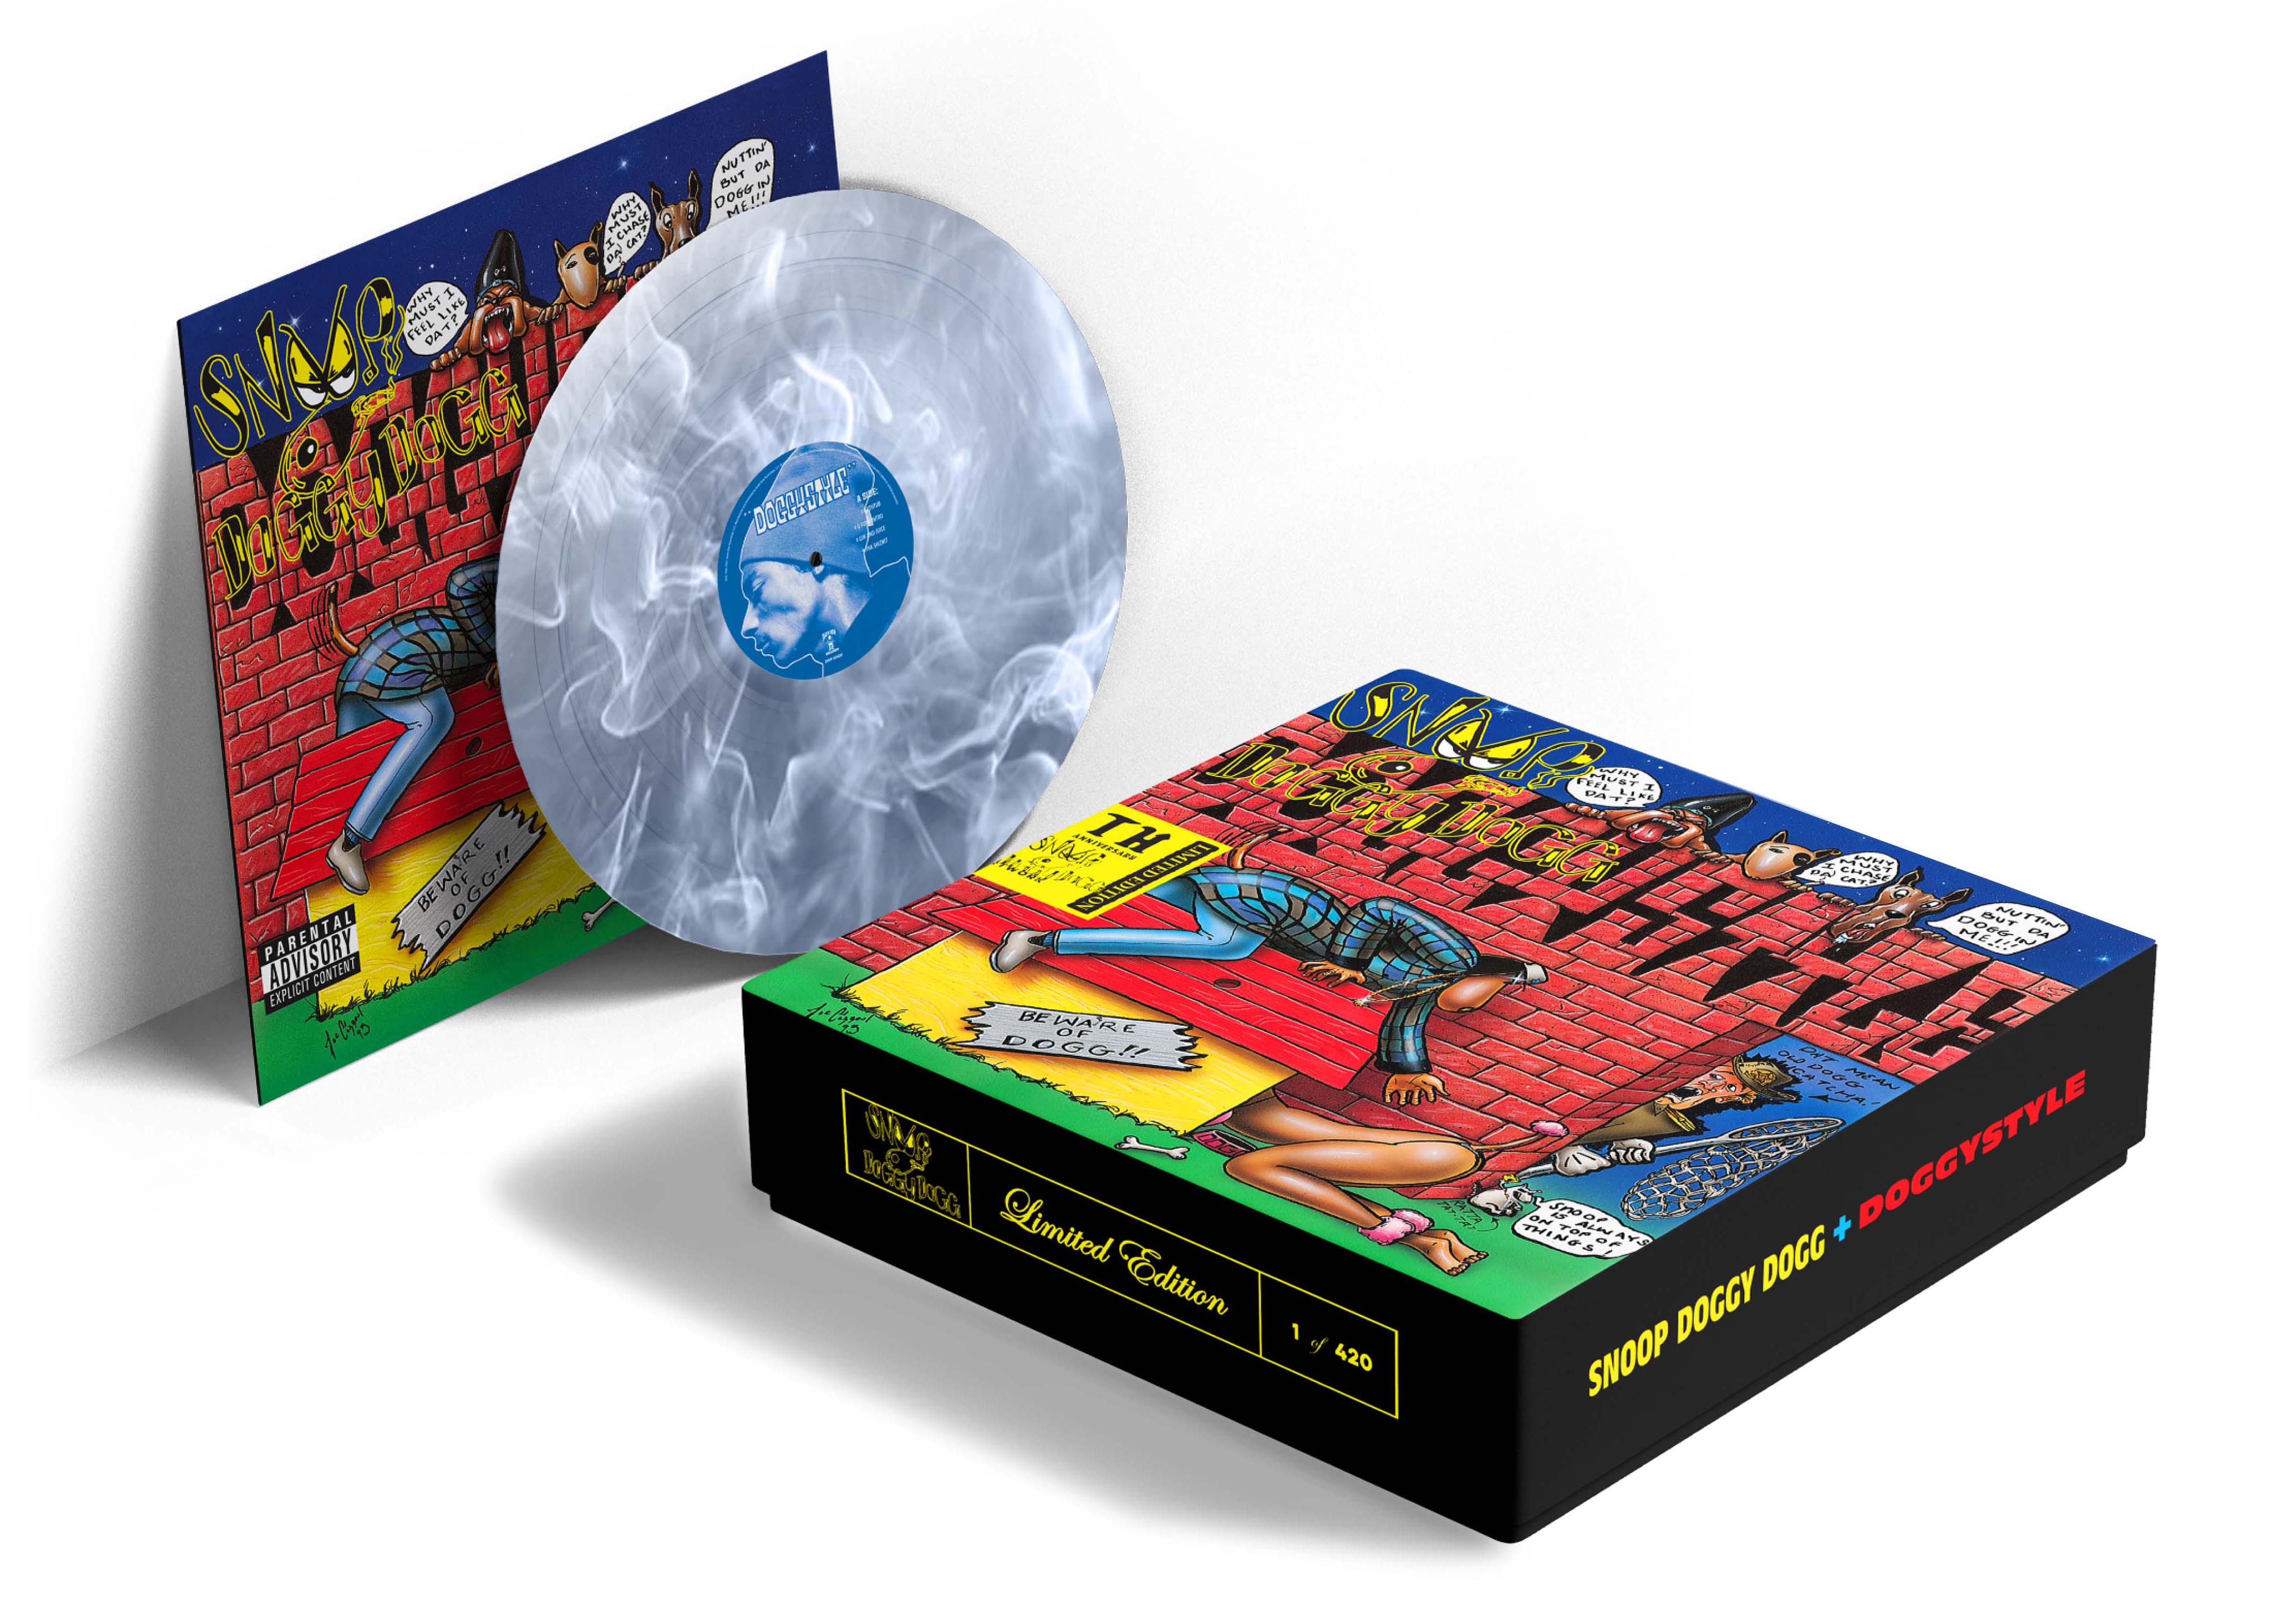 Snoop Dogg Doggystyle 4/20 Limited Edition LP Vinyl Boxset